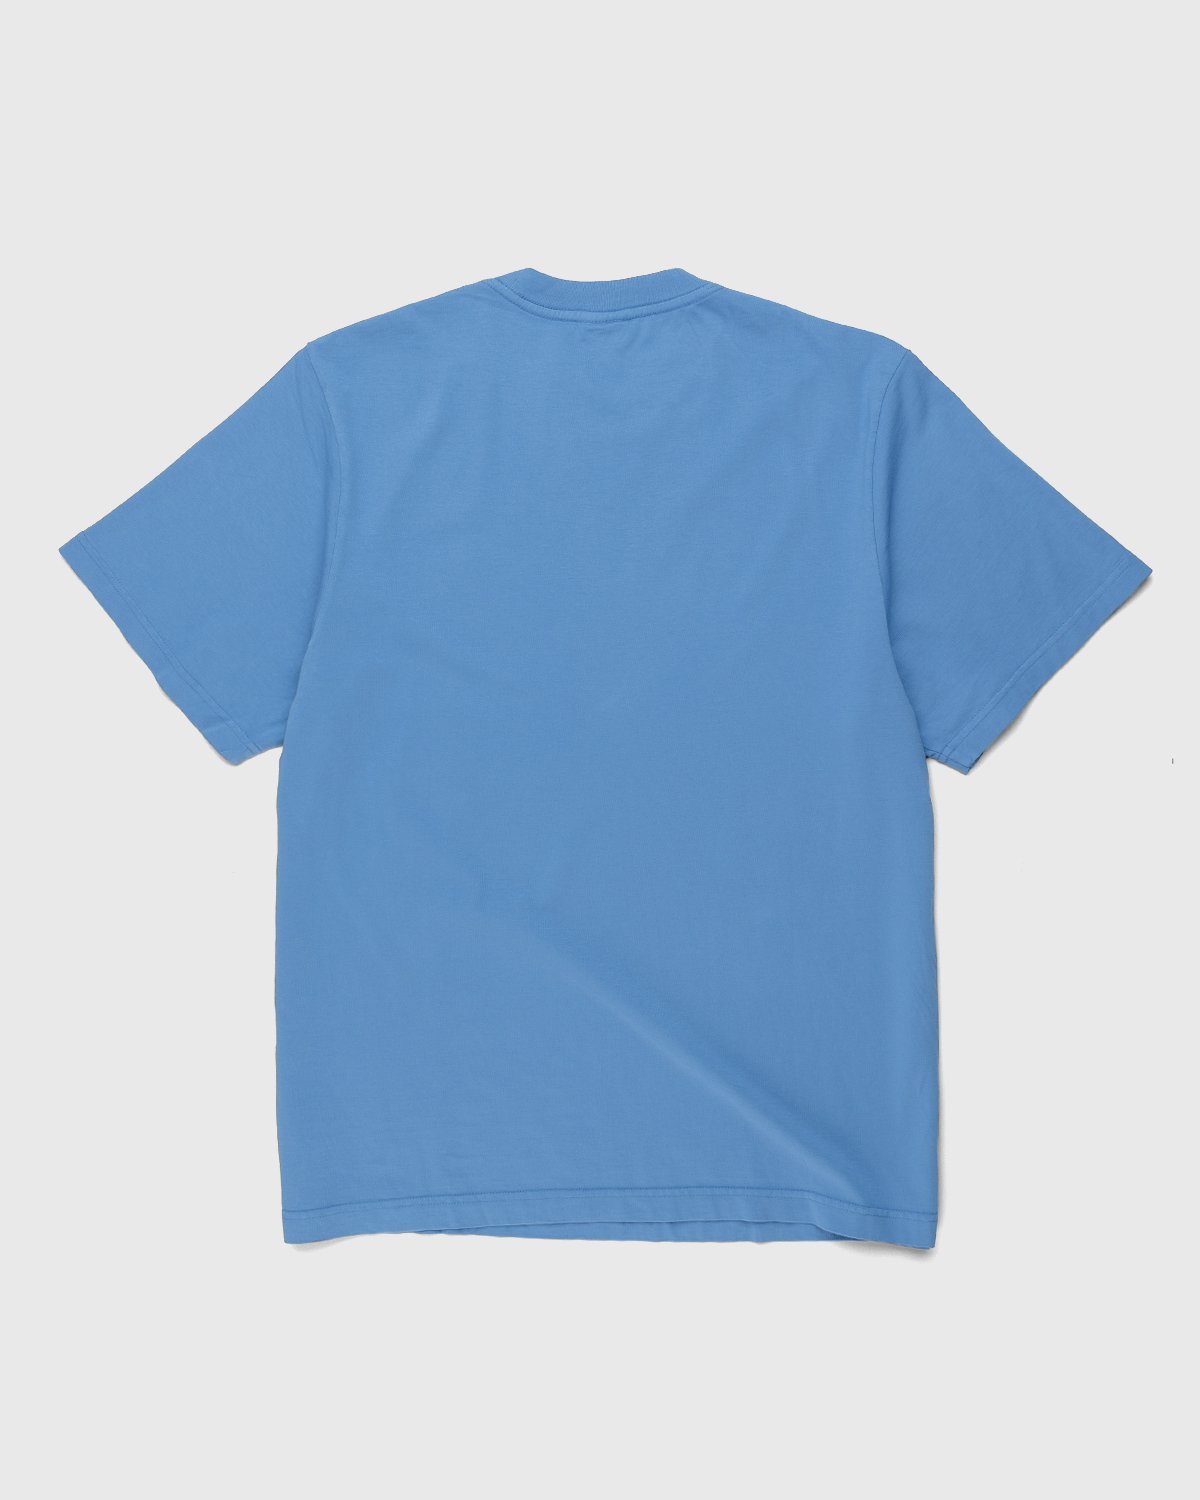 Noon Goons - Sister City T-Shirt Blue - Clothing - Blue - Image 2